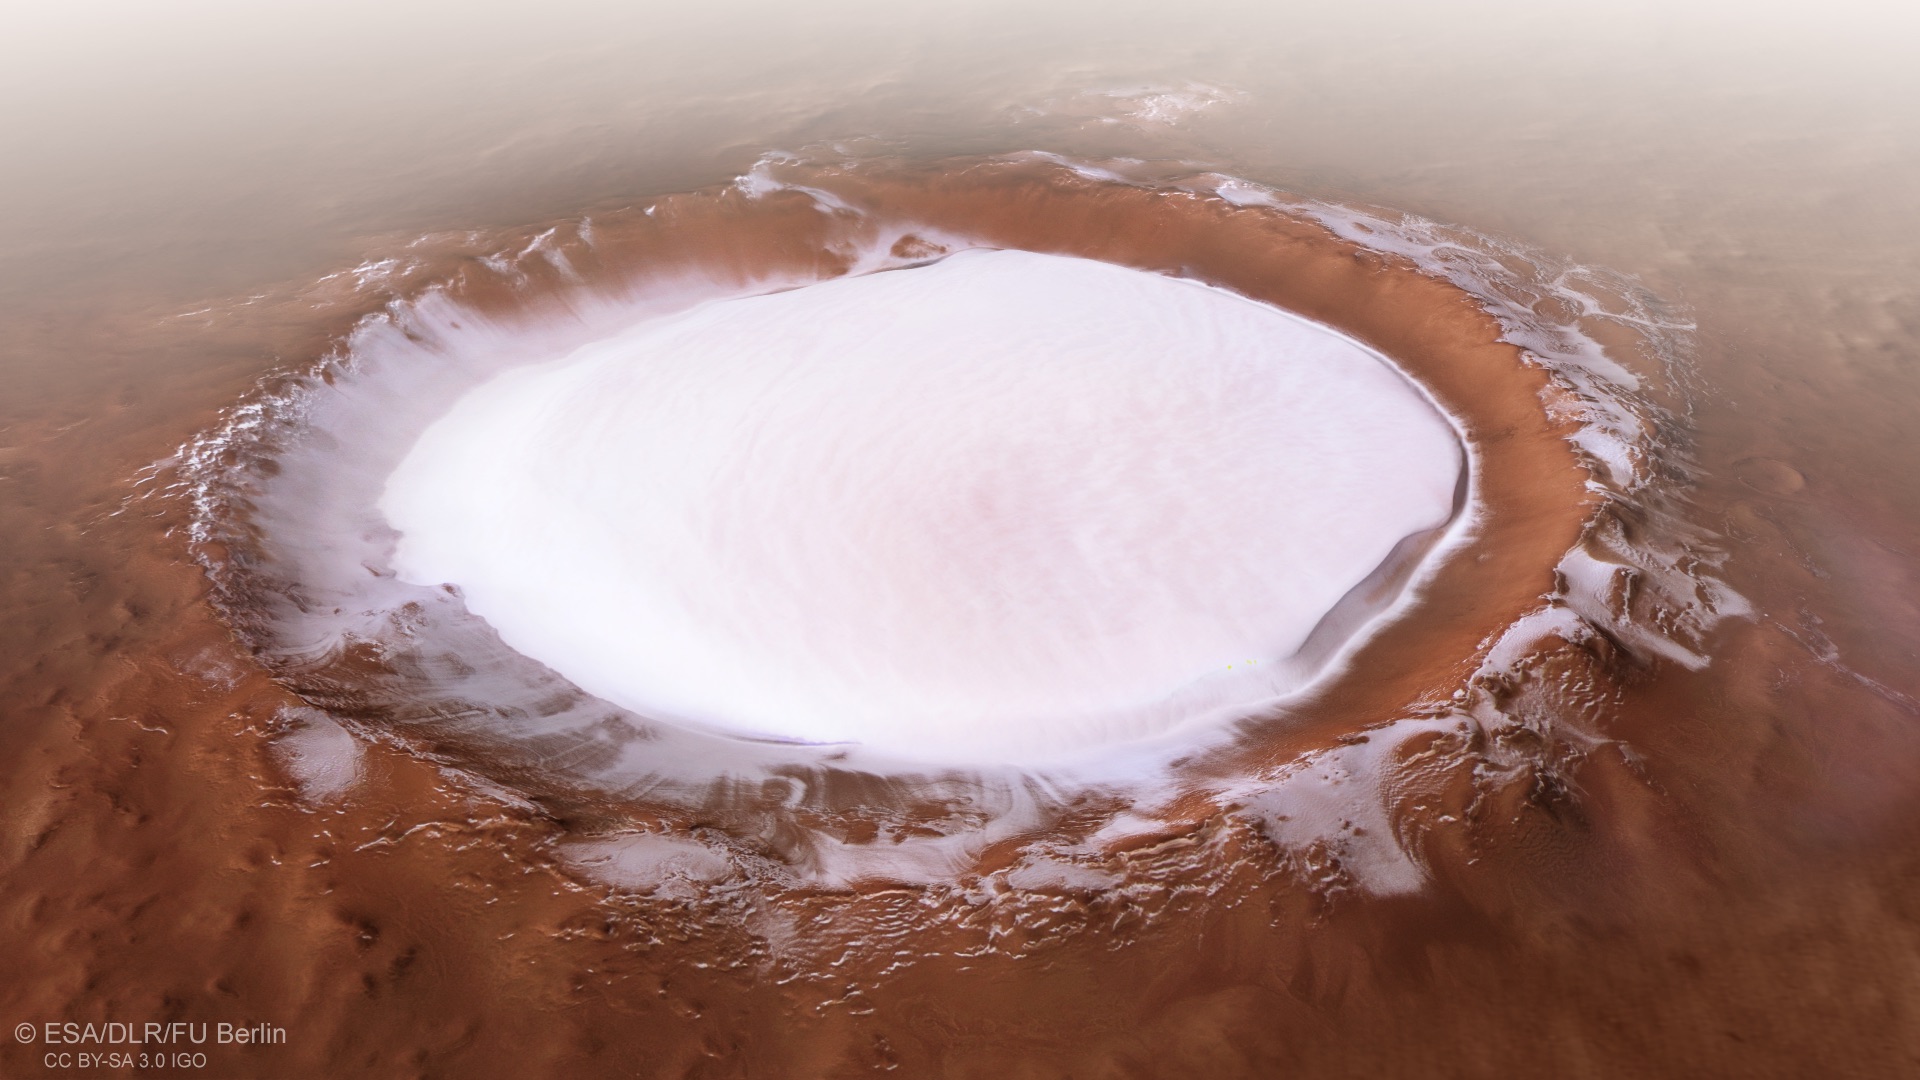 korolev crater mars image 